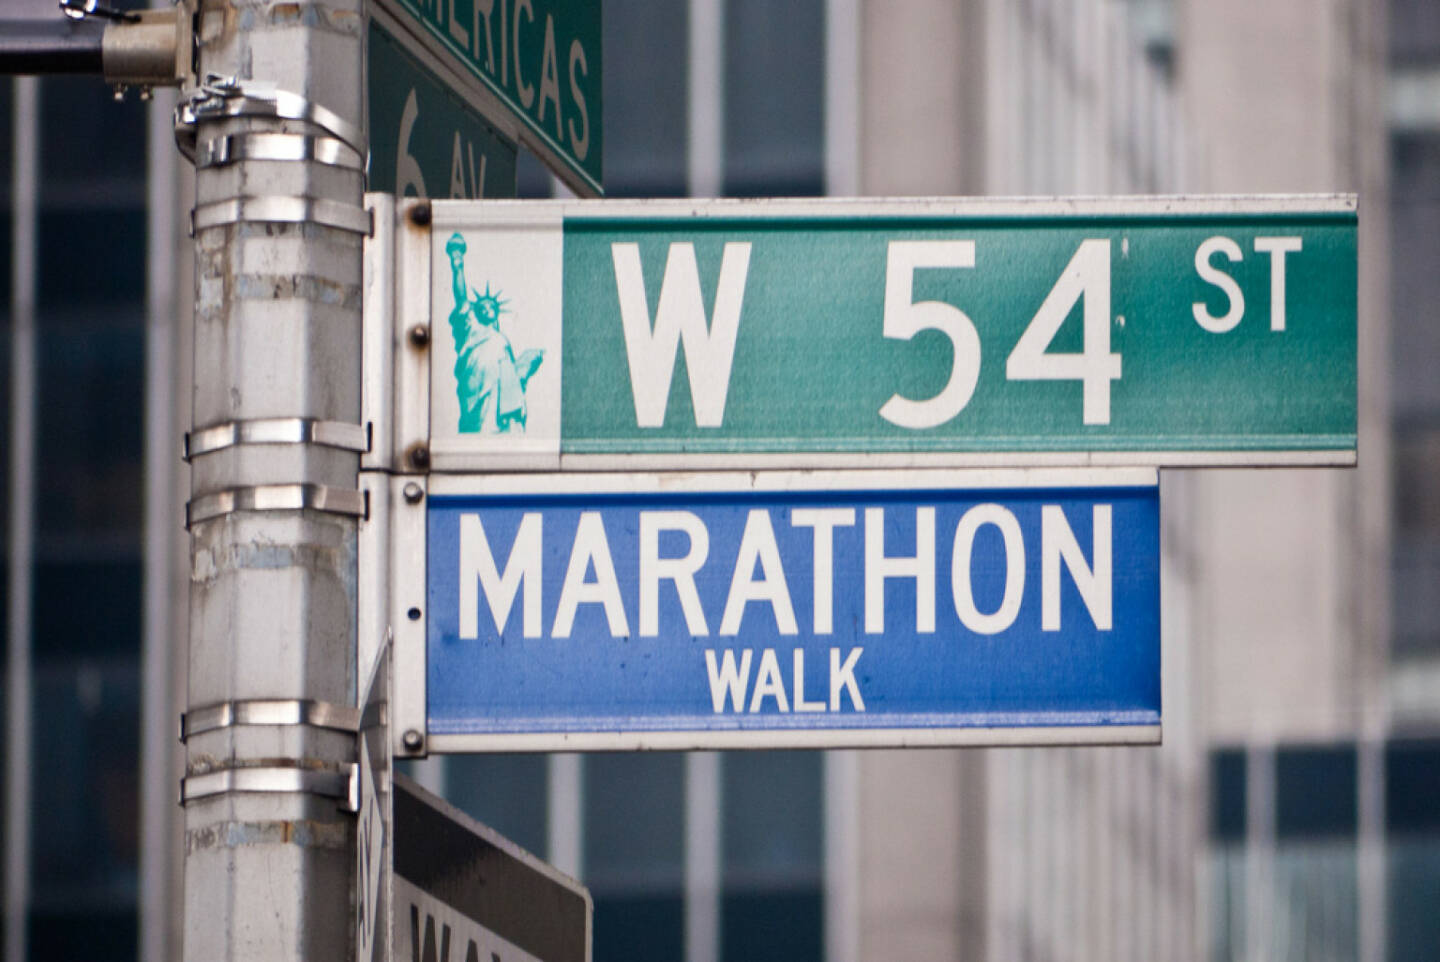 New York City, USA, Marathon, Marathon Walk, The Big 6, The Big Six, http://www.shutterstock.com/de/pic-105883196/stock-photo-marathon-walk-street-sign-in-new-york-city-located-at-the-corner-of-west-th-st-and-th-avenue.html